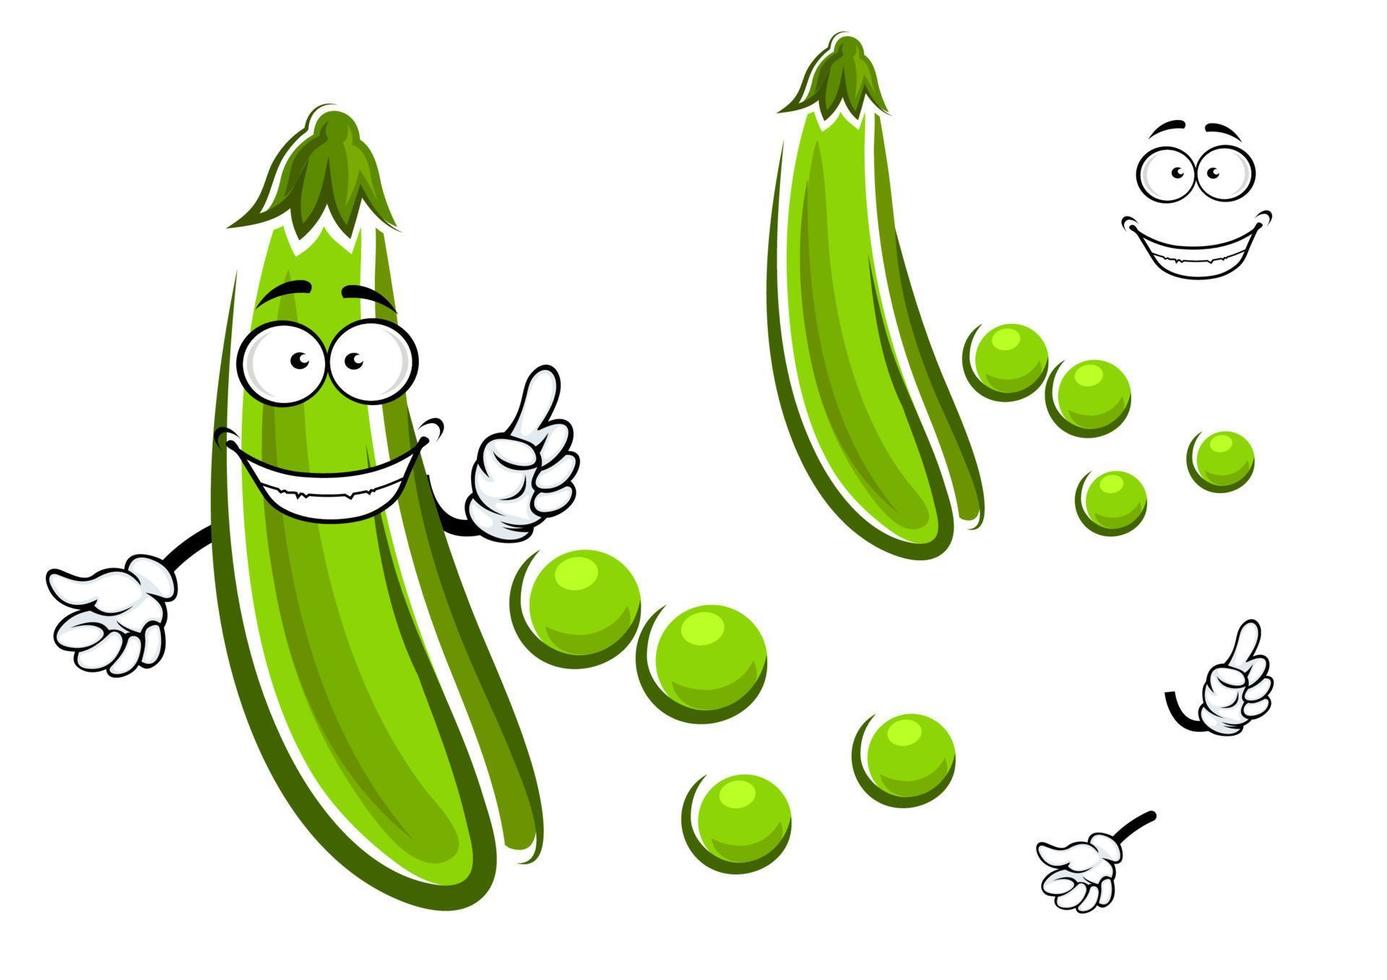 vegetal de vaina de guisante verde de dibujos animados vector